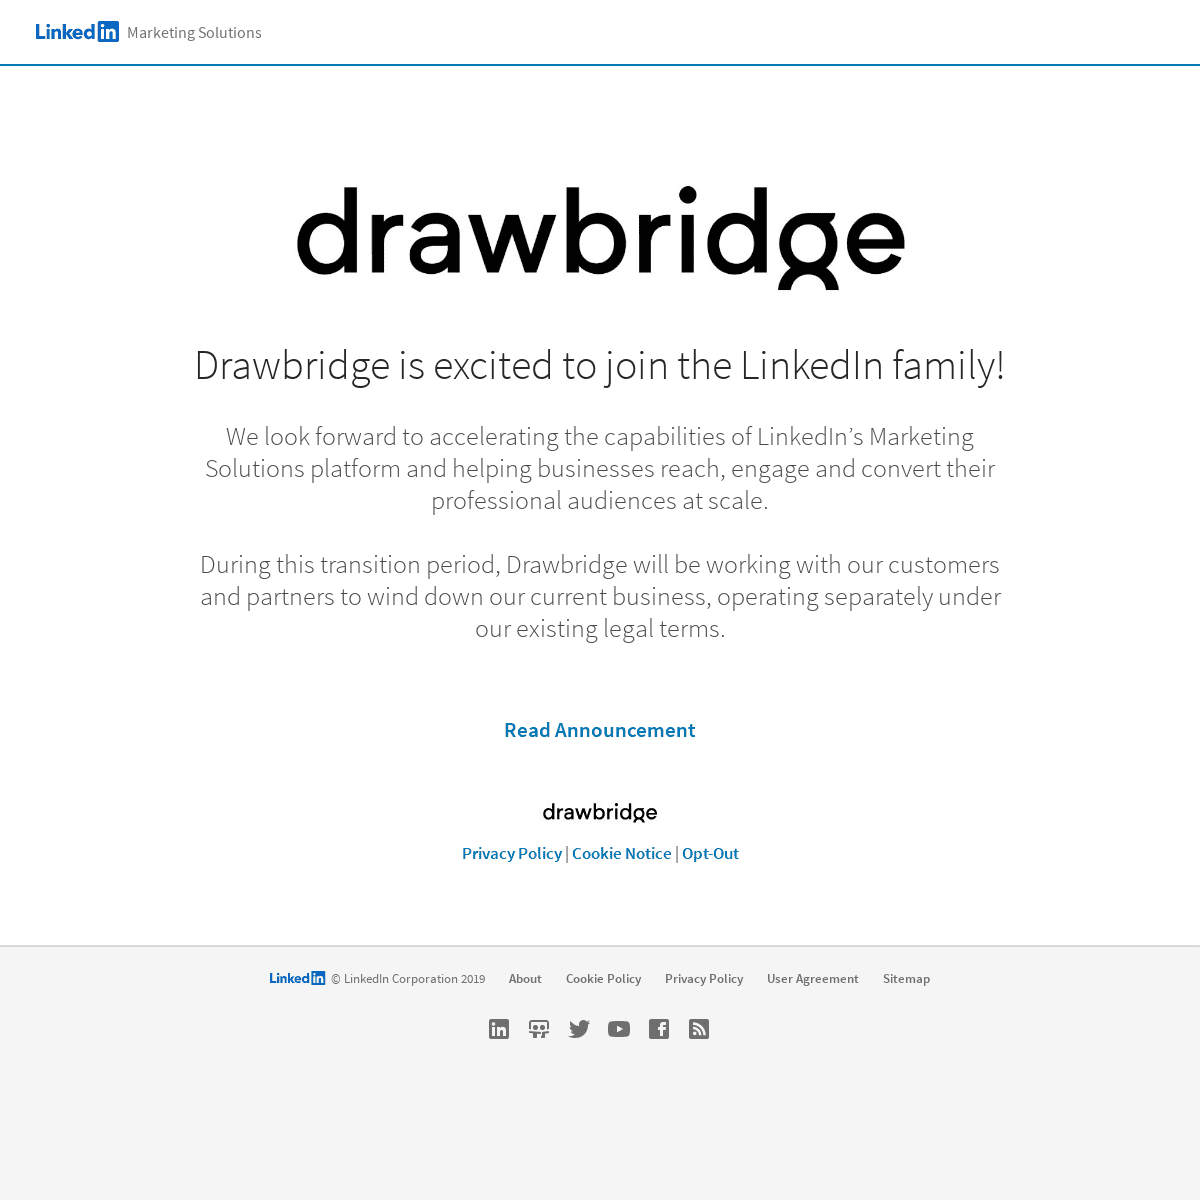 A complete backup of drawbridge.com